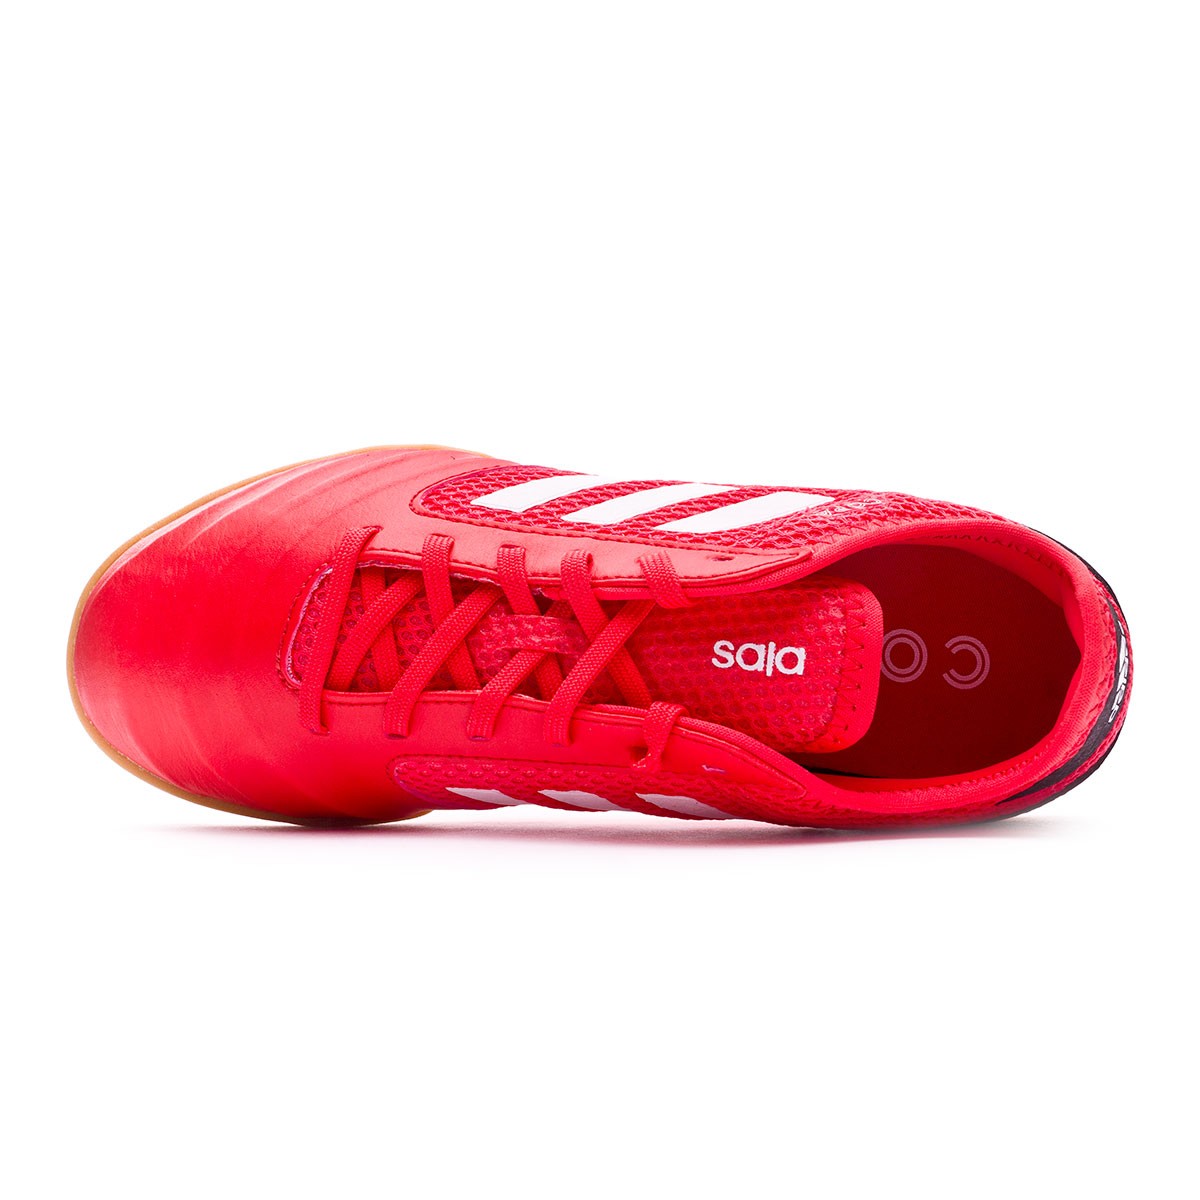 adidas copa tango 18.3 topsala futsal boot